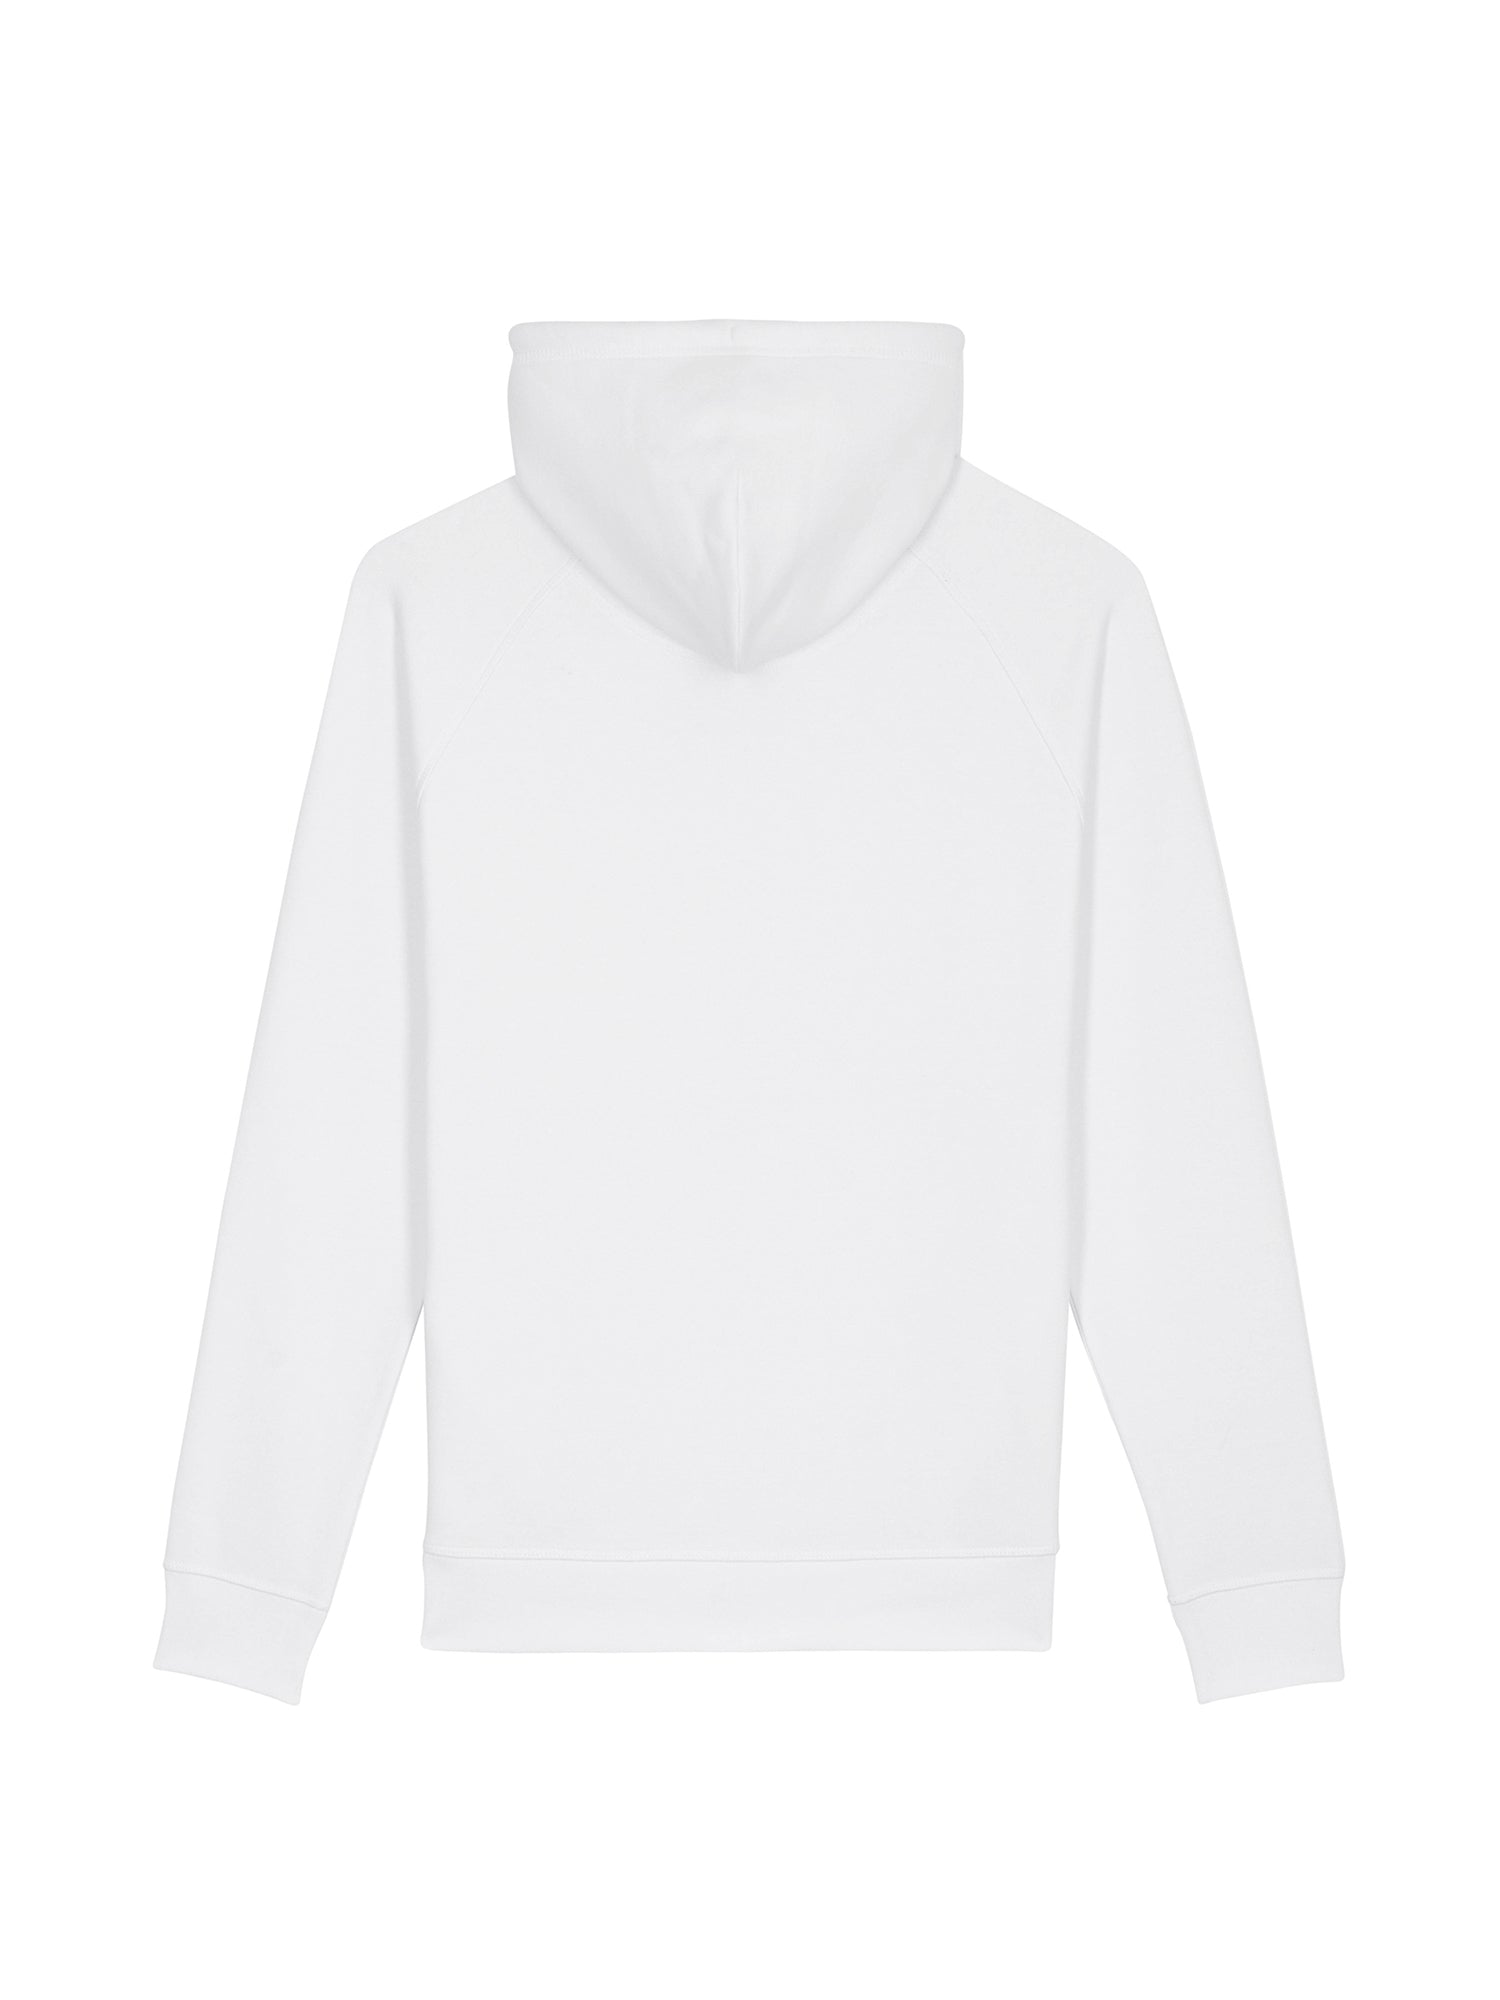 stanley stella unisex organic hoodie stsu824 portait white back flat lay